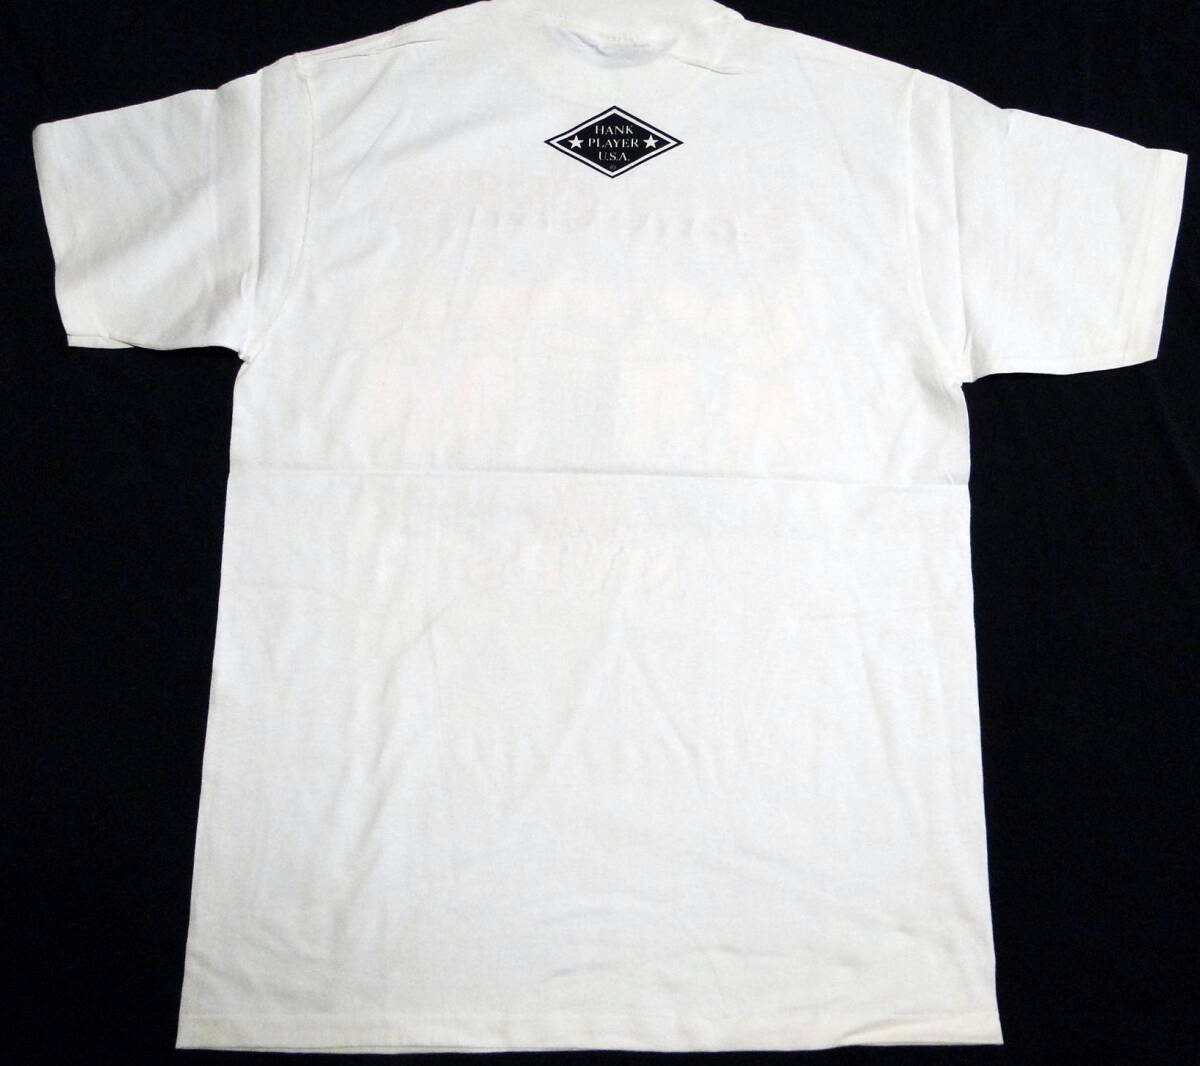 90's デッドストック ハンクプレーヤー 半袖Tシャツ Majer HANK PLAYER Made in U.S.A HANK PLAYER 送料込